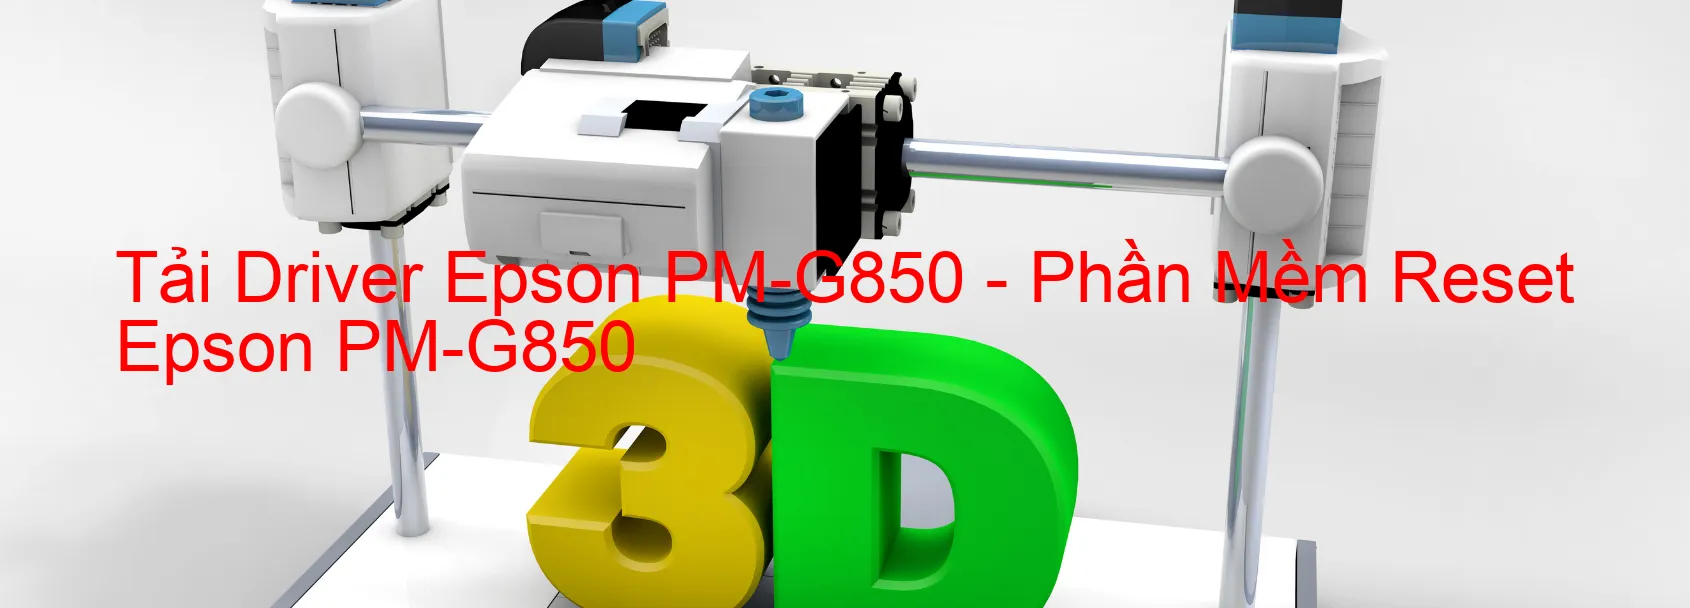 Driver Epson PM-G850, Phần Mềm Reset Epson PM-G850